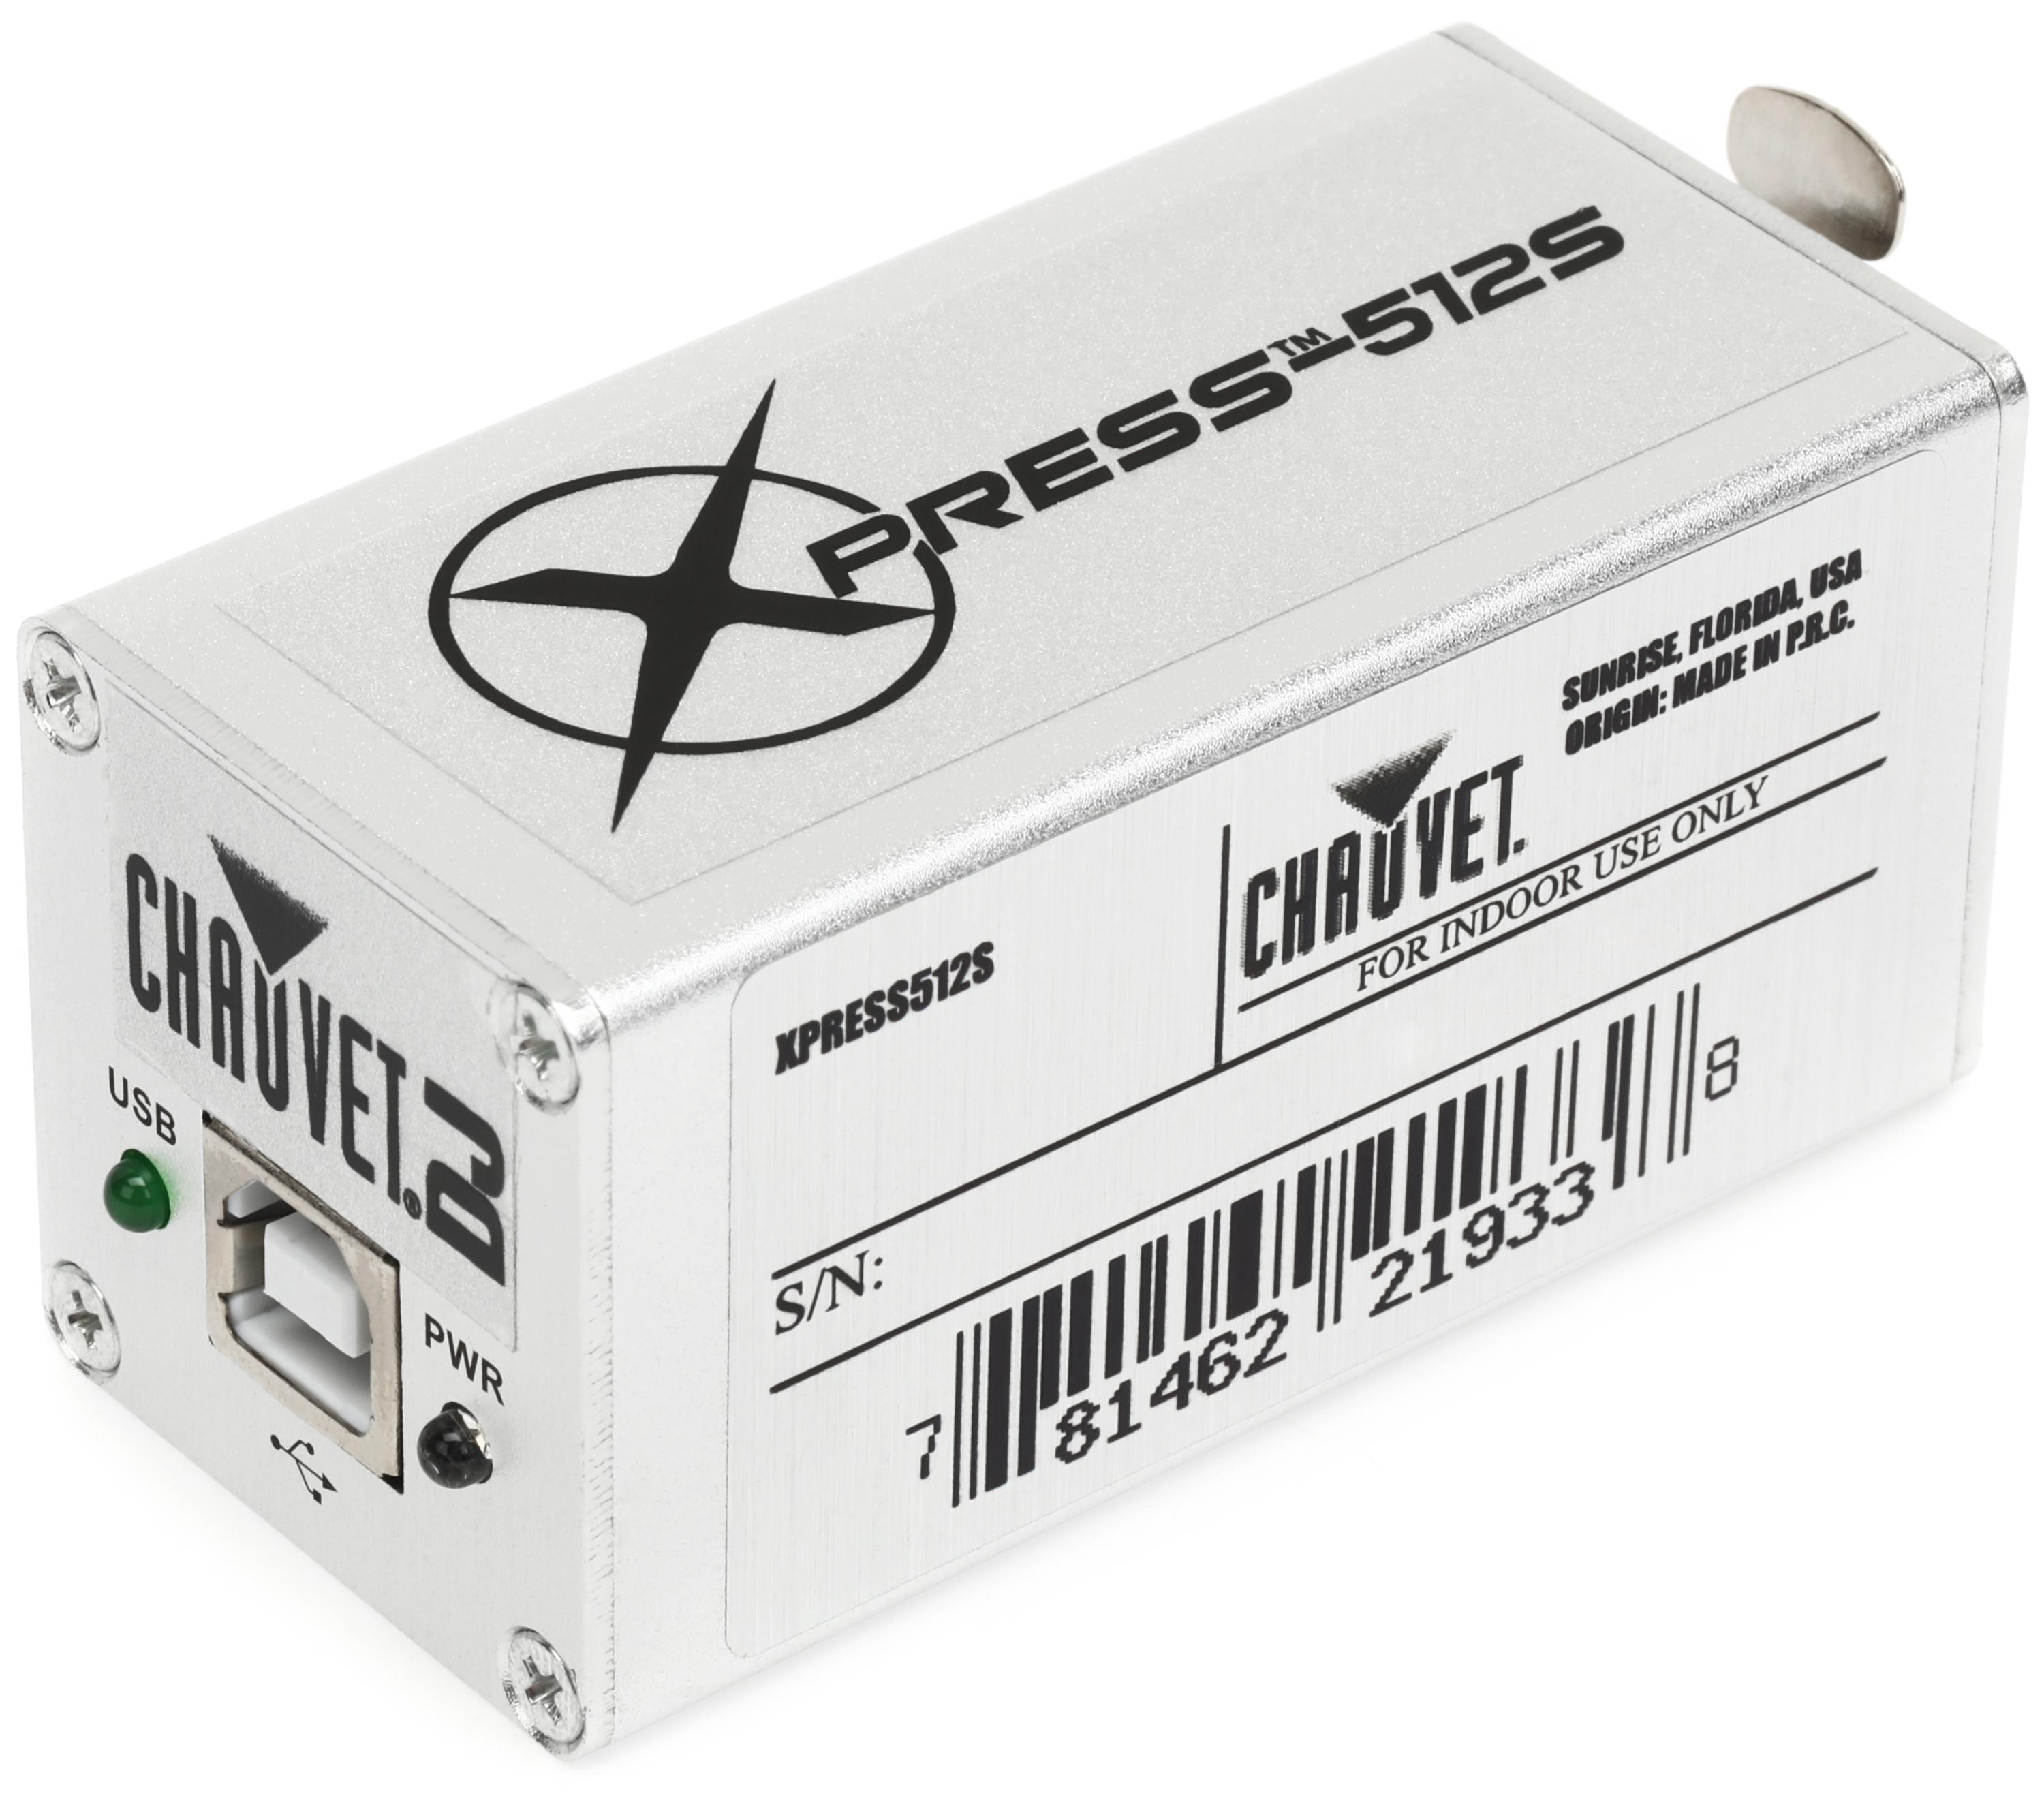 Chauvet DJ XpressS DMX Lighting Interface Bundle with 2